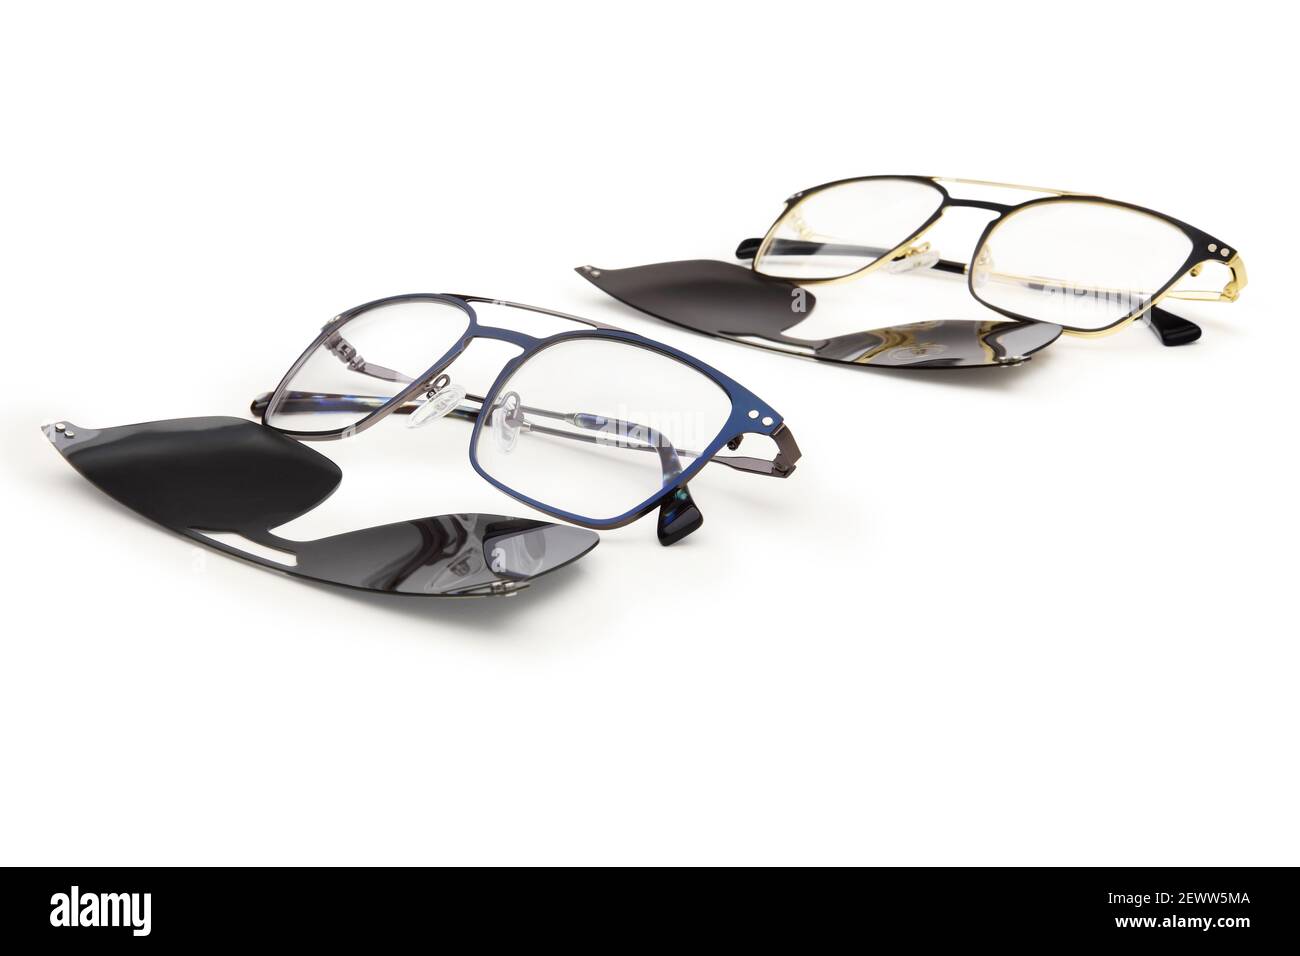 eyewear polarized clip on sunglasses with magnetic lenses isolated on white background Stock Photo